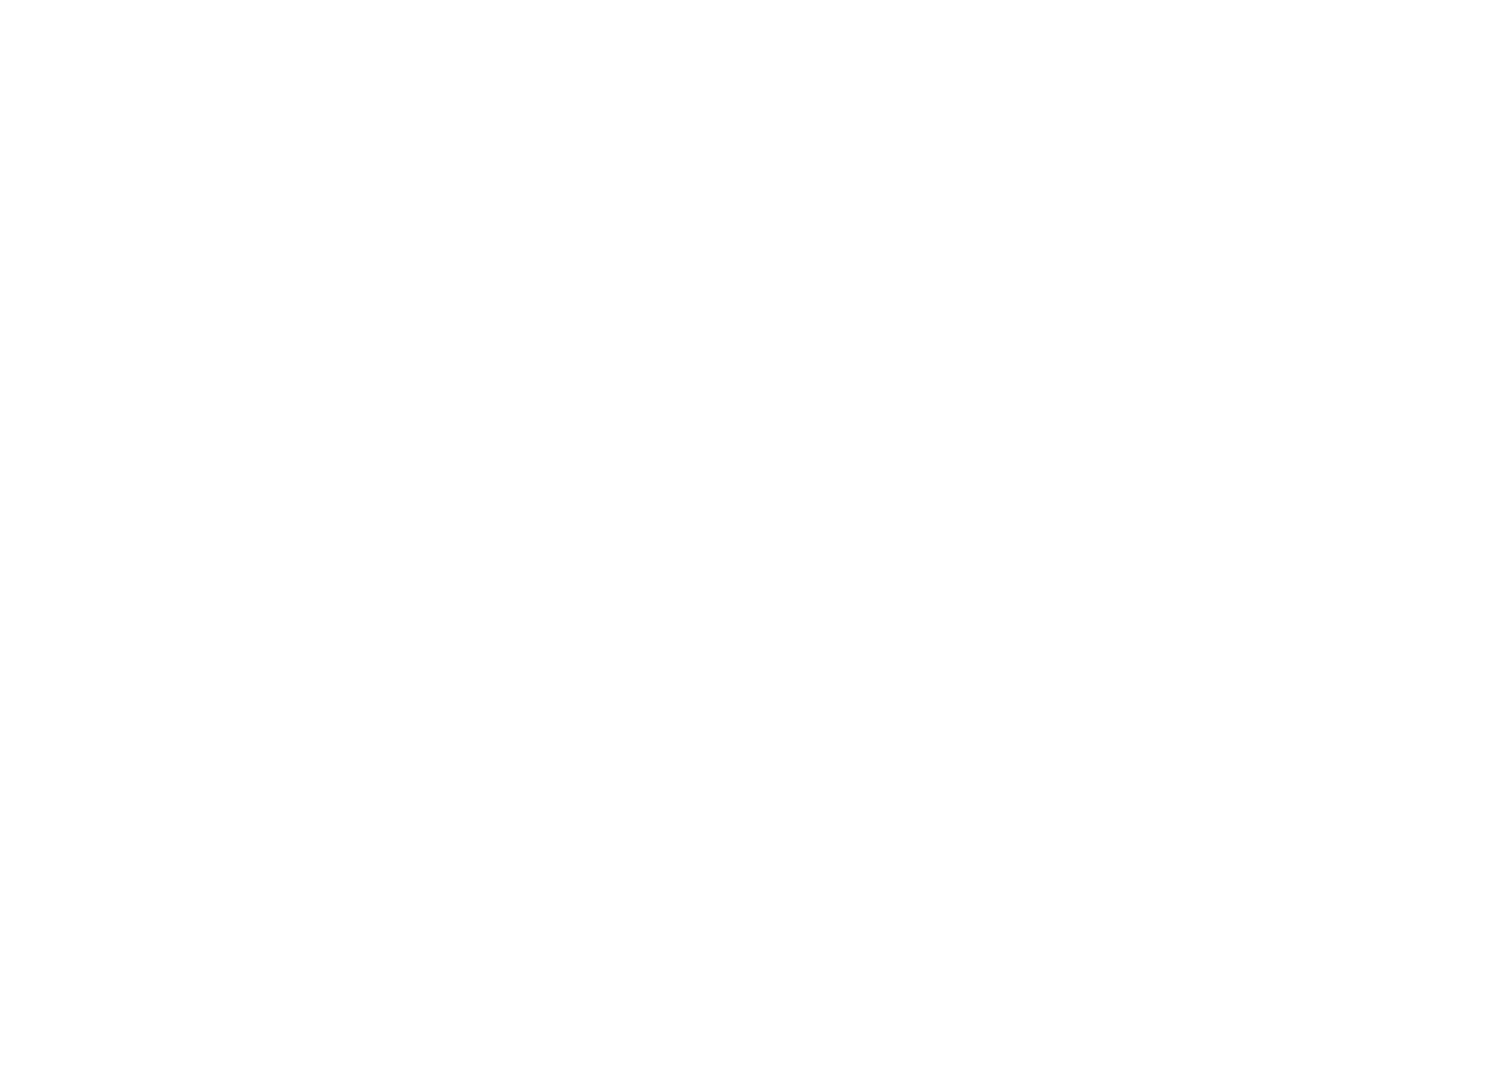 KL Environmental